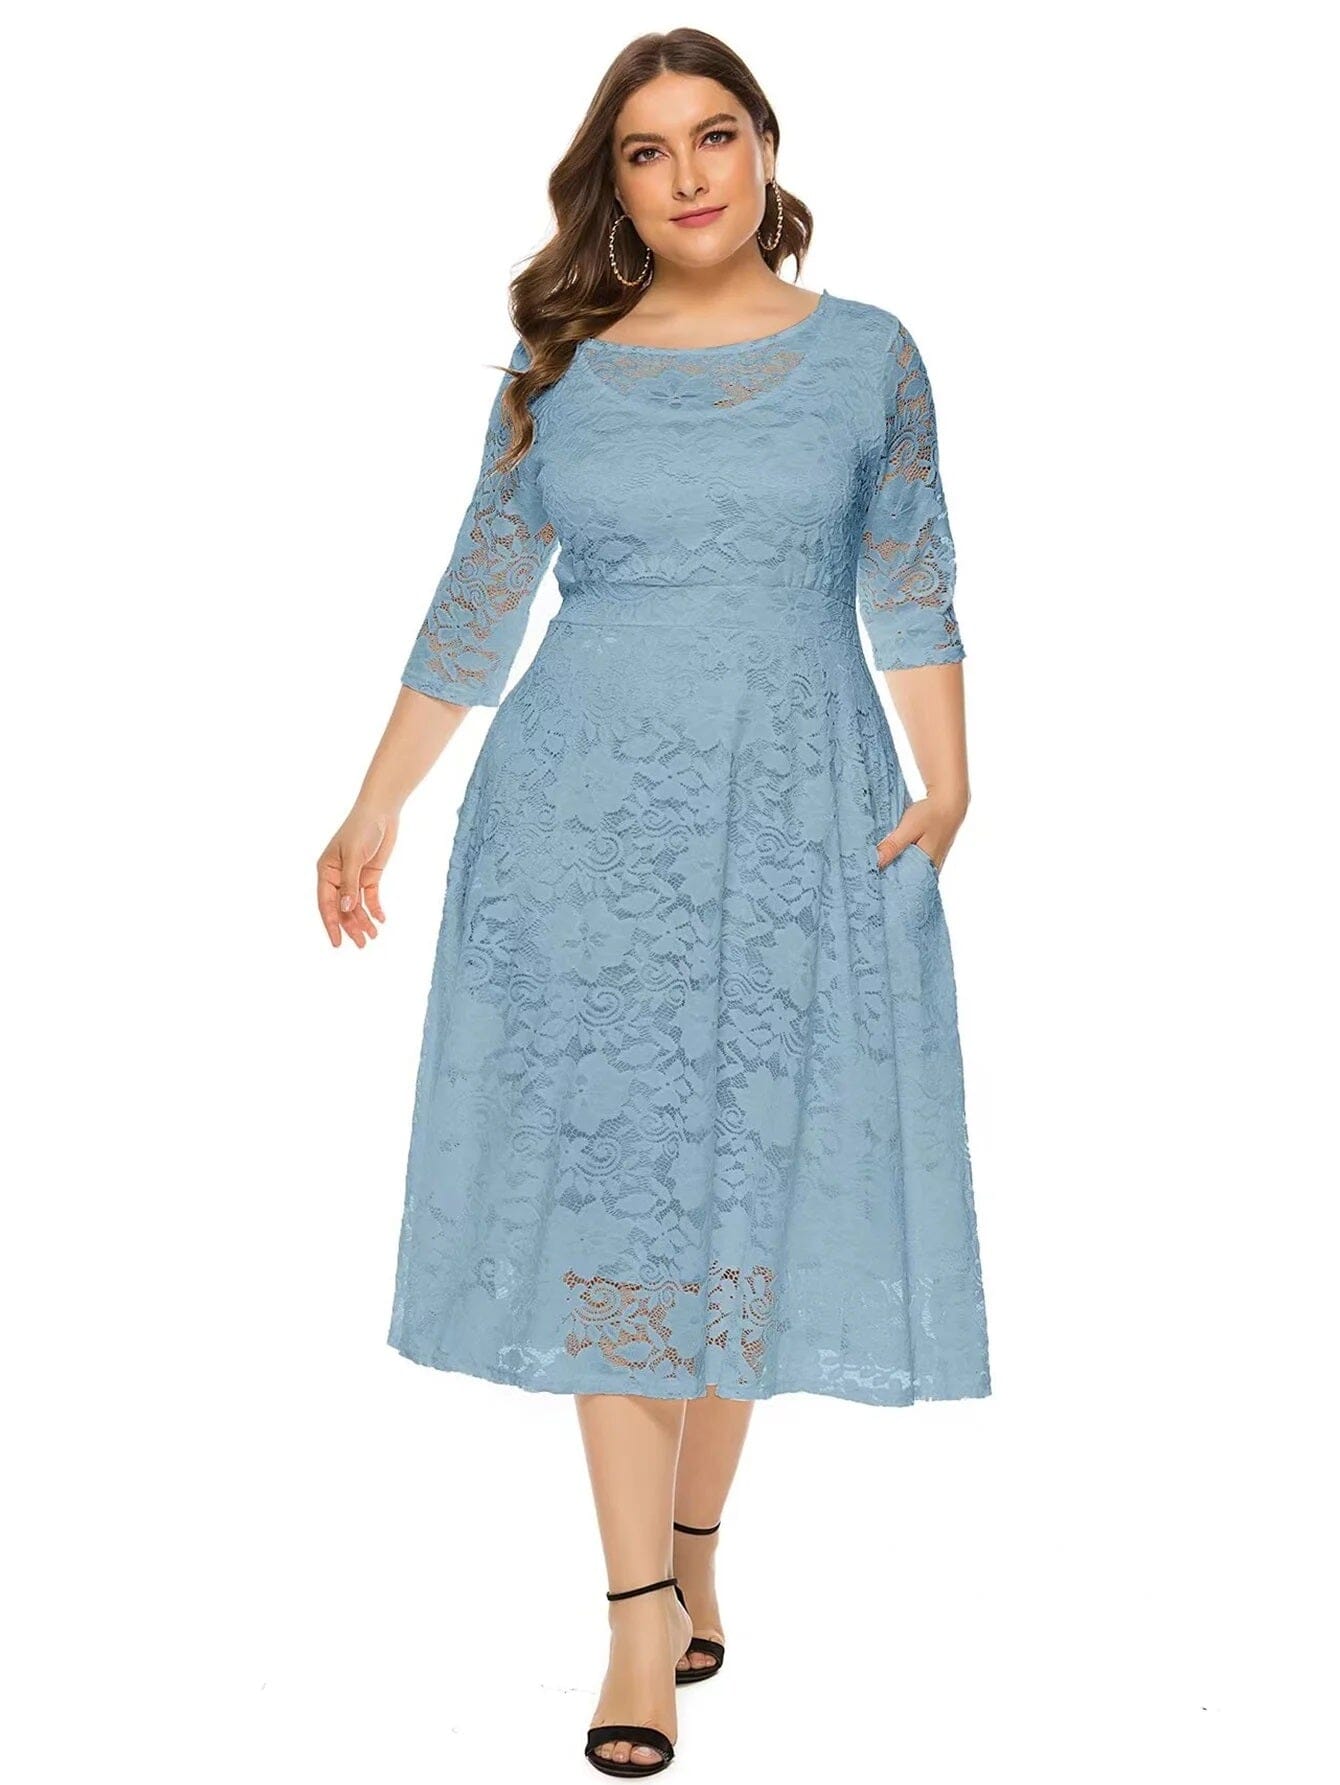 Women Plus Size Vintage Lace Swing Party Cocktail Wedding Midi Dress with pocket Dresses jehouze Blue XL 